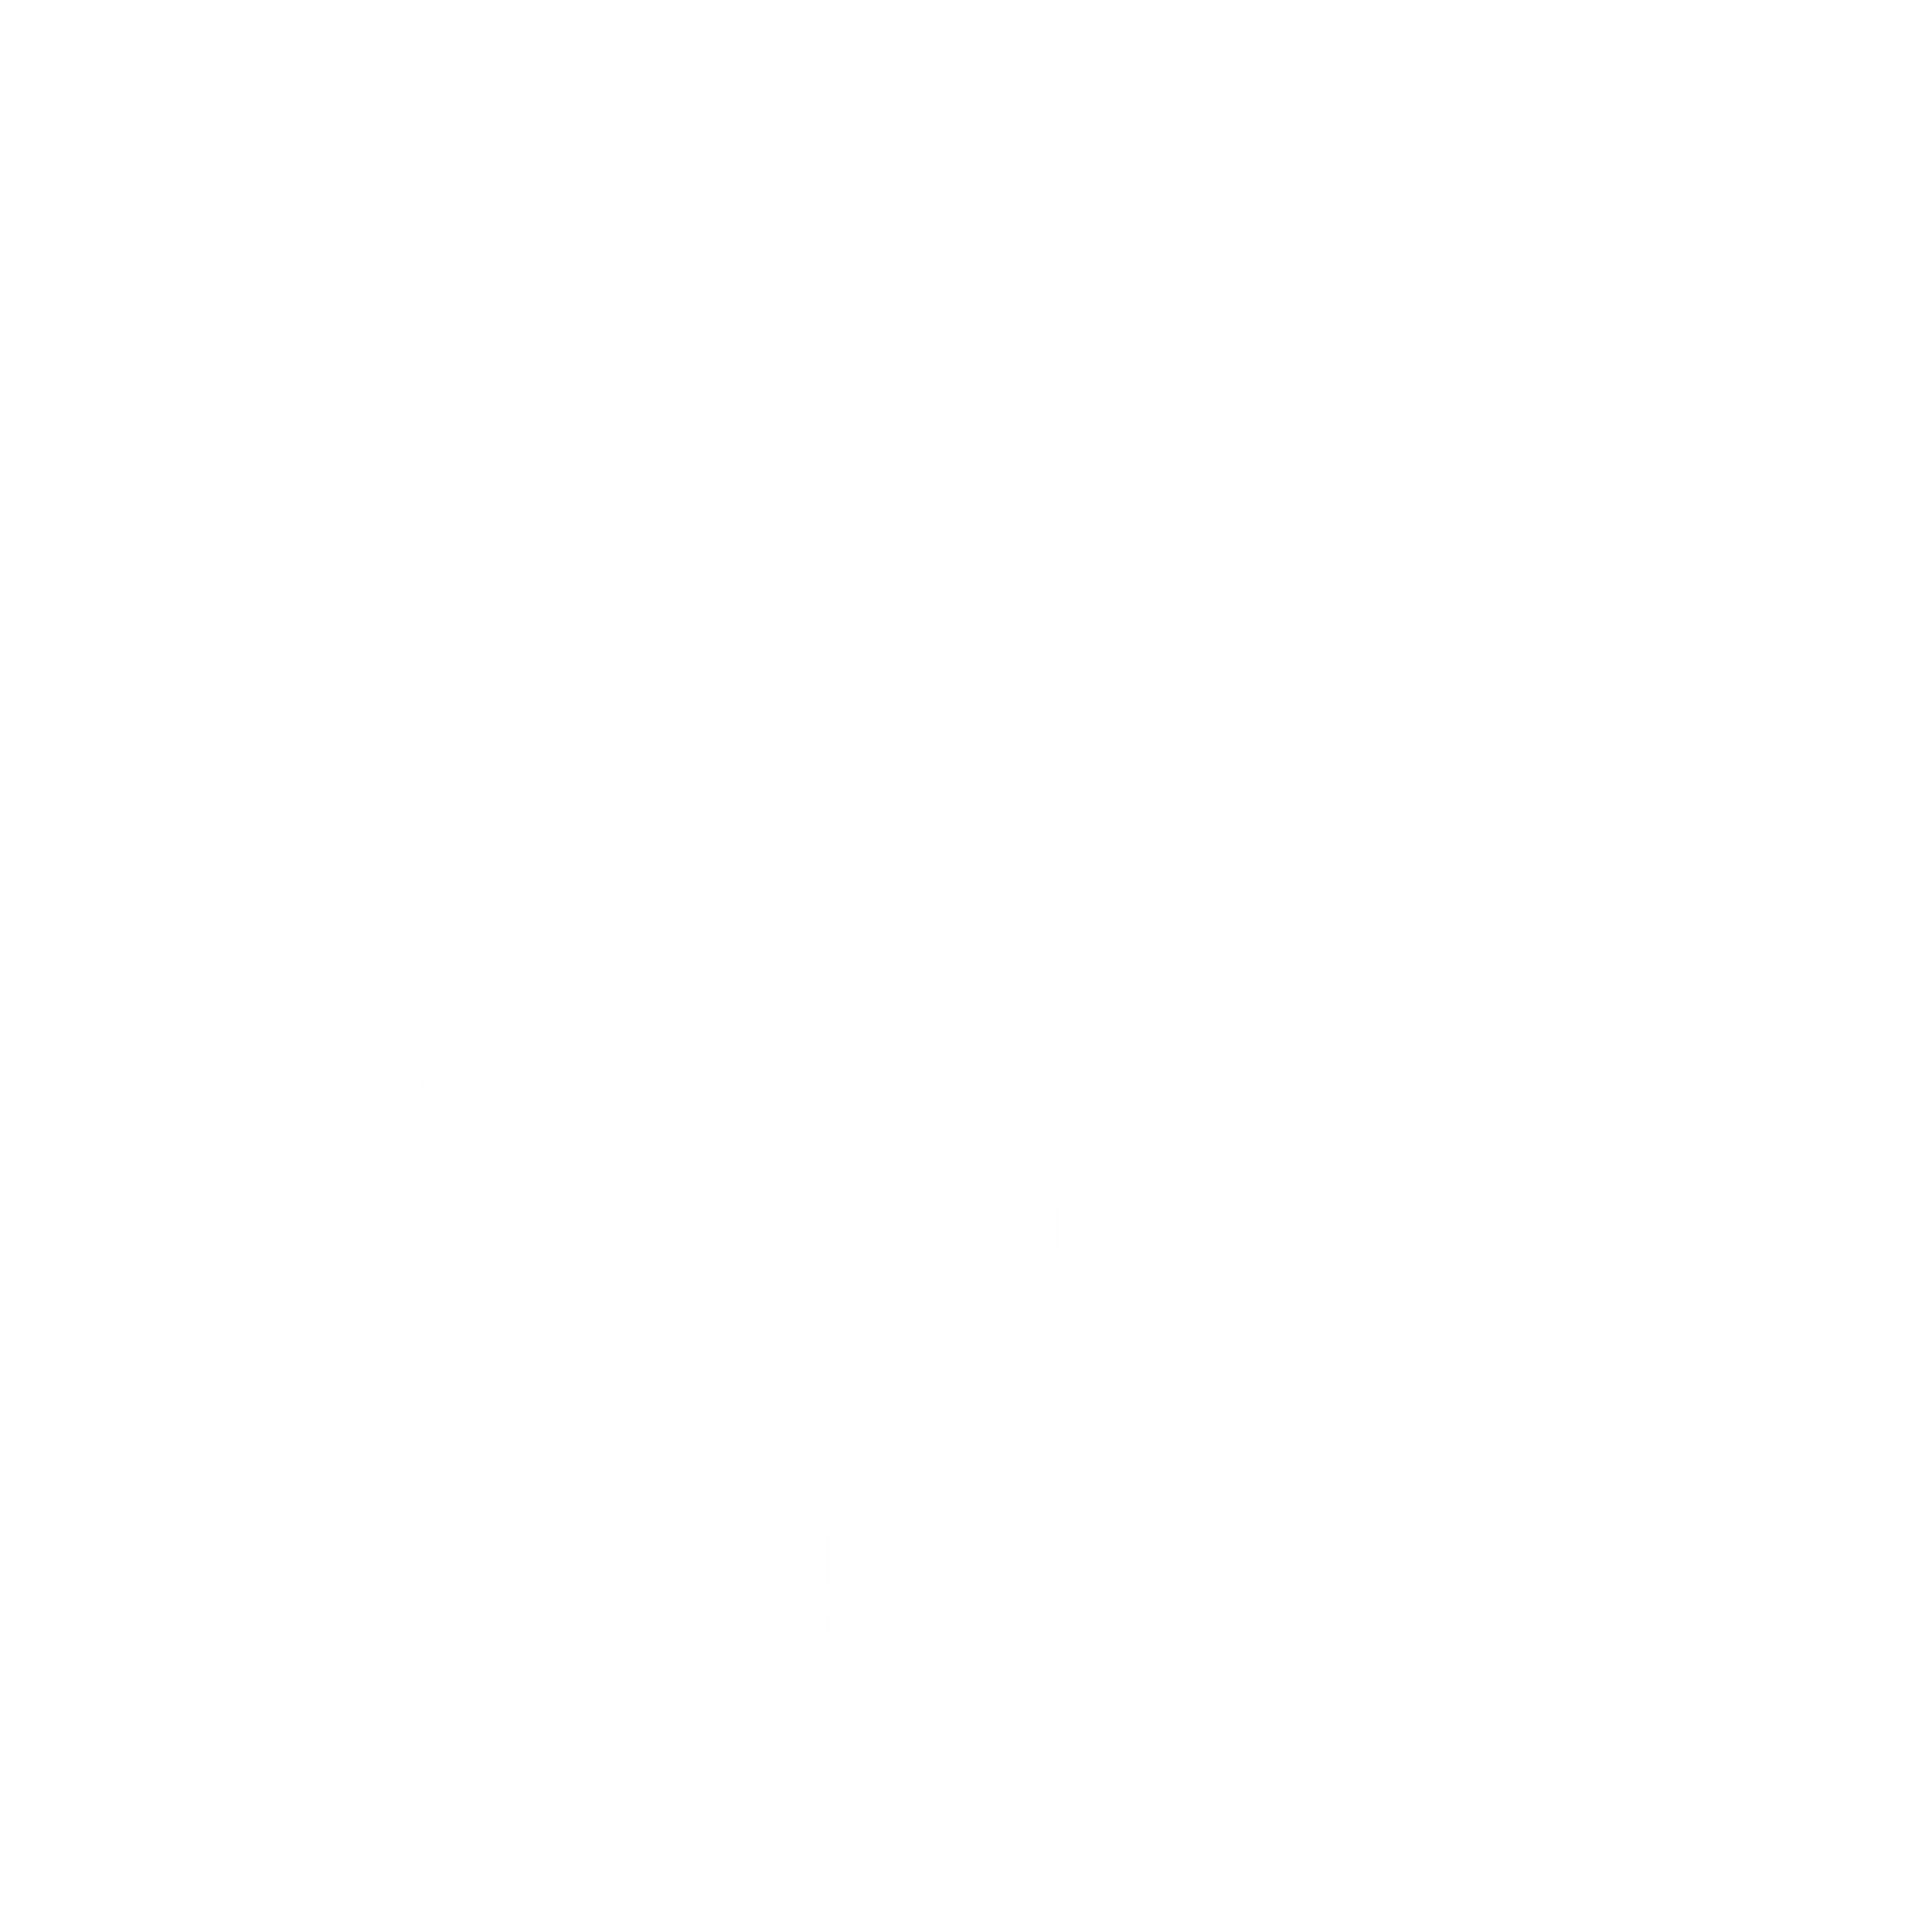 white house black market logo